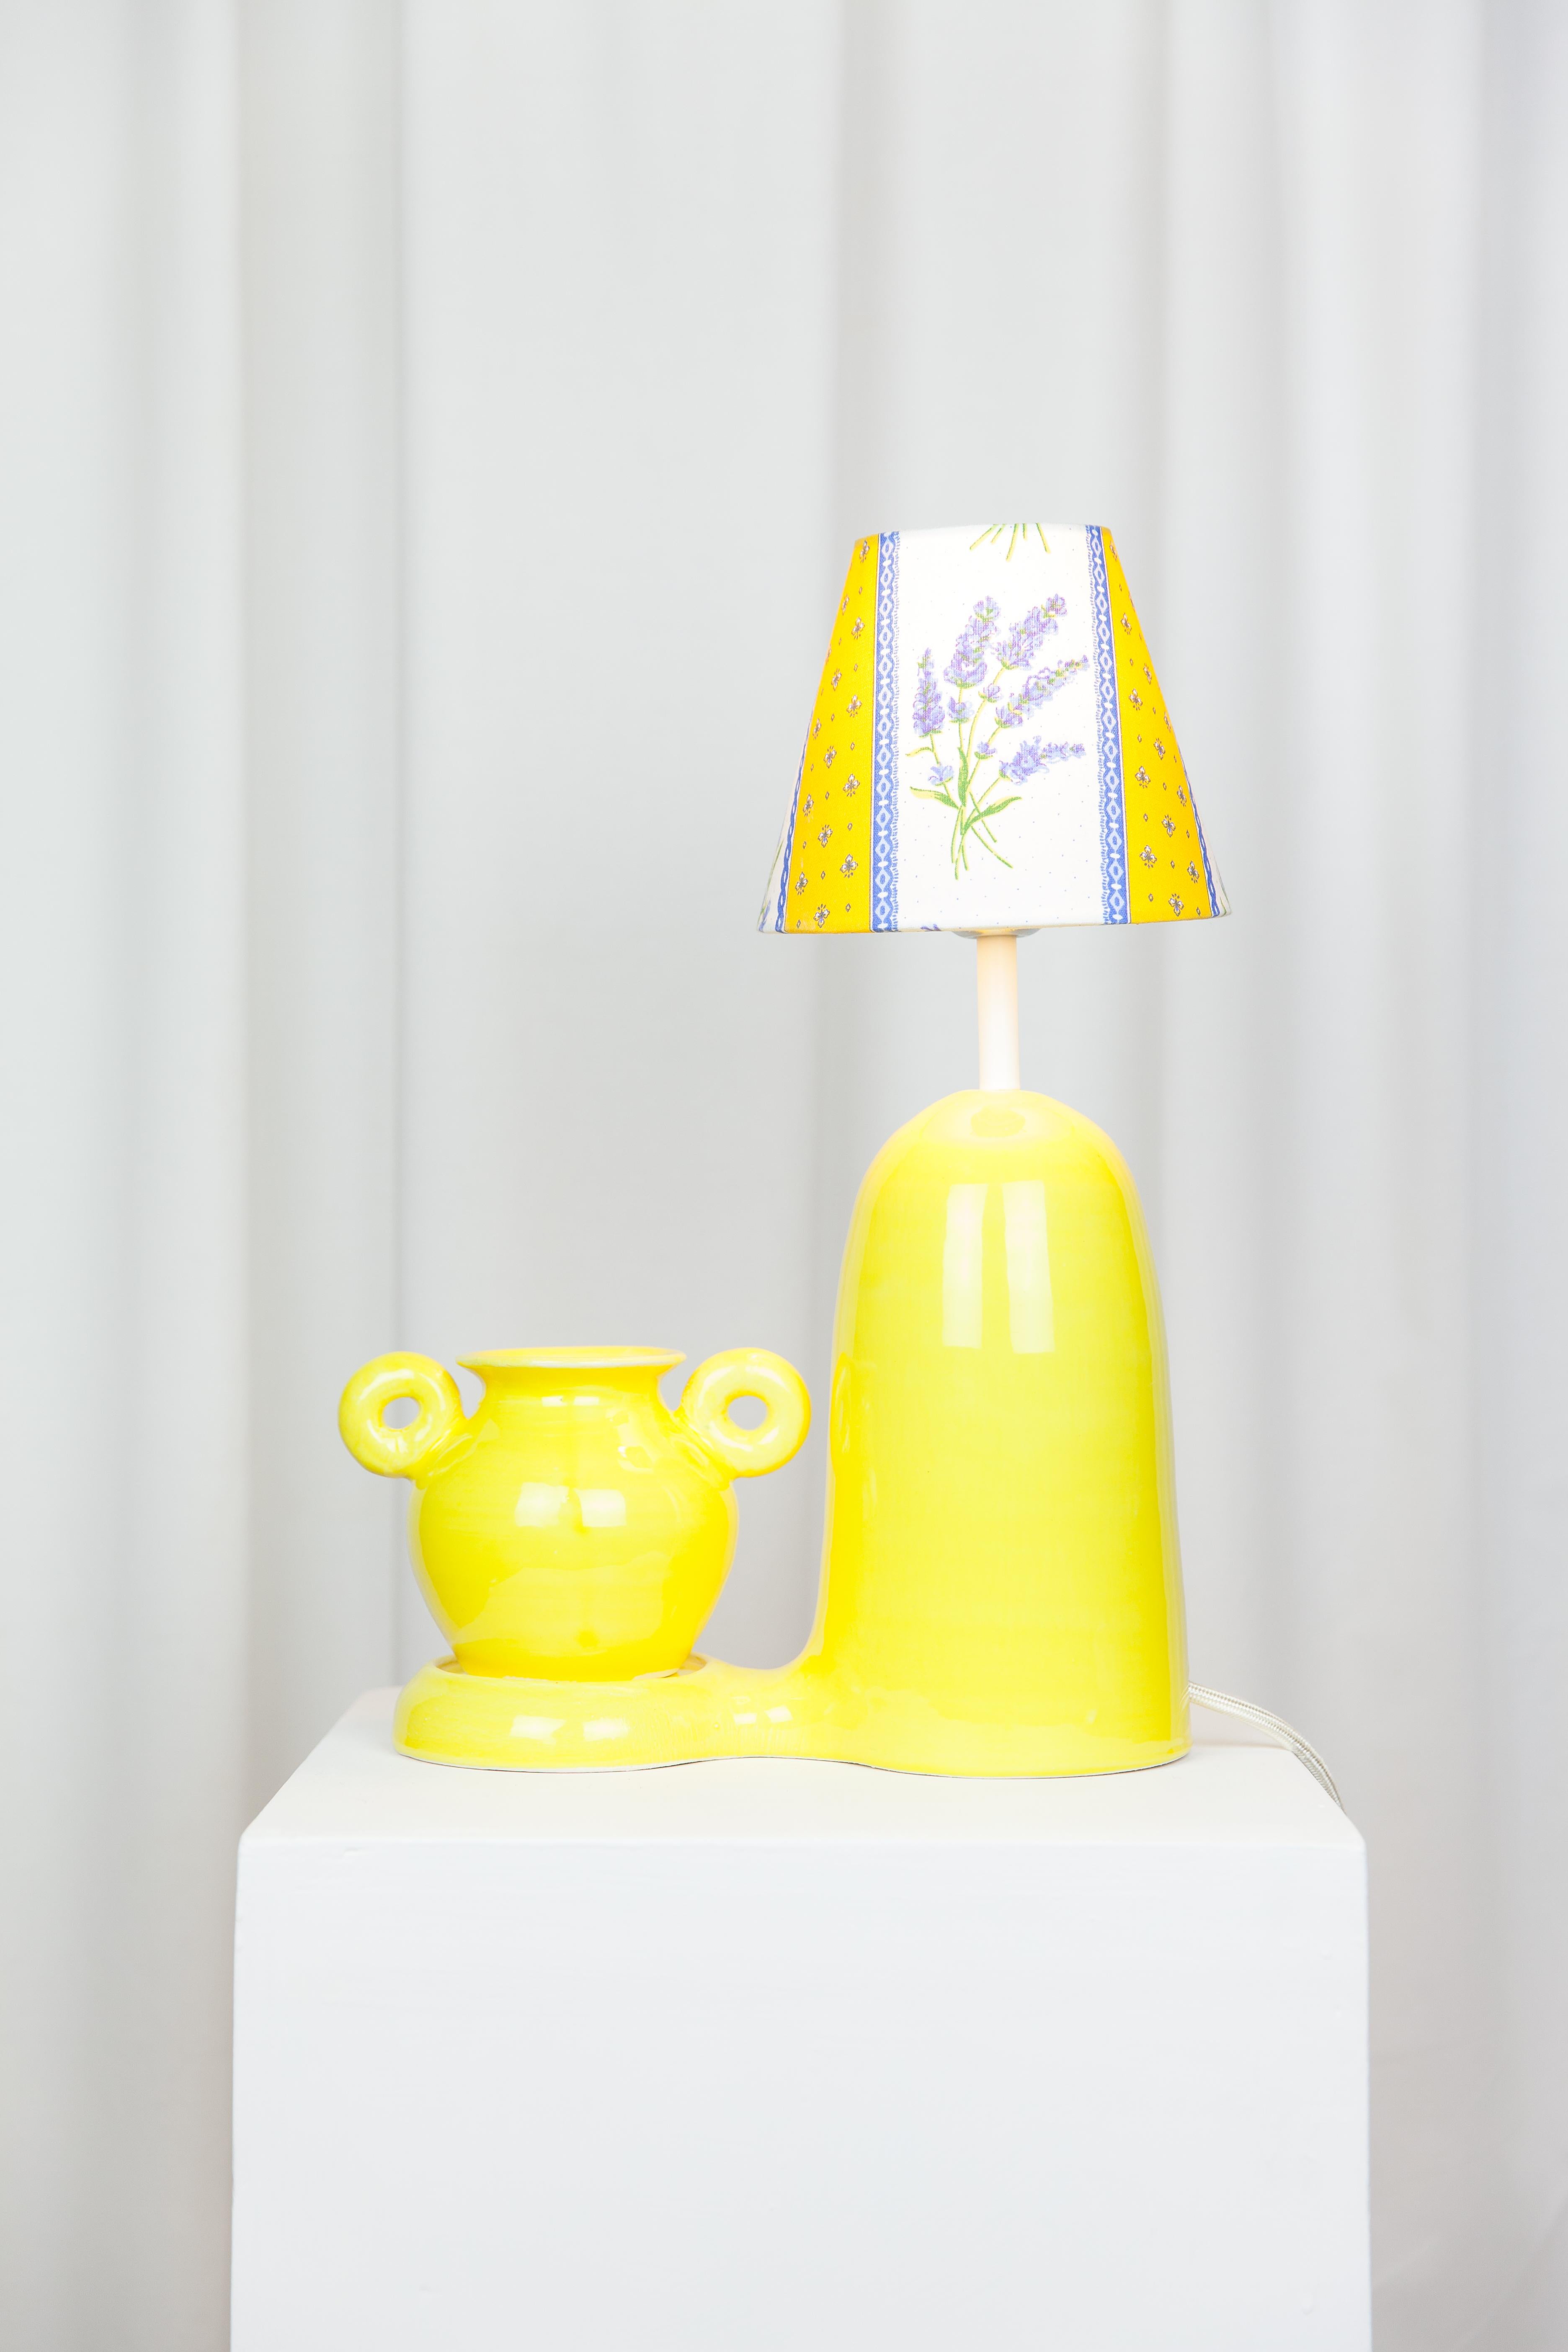 French Bloom Yellow Lamp + Vase by Lola Mayeras